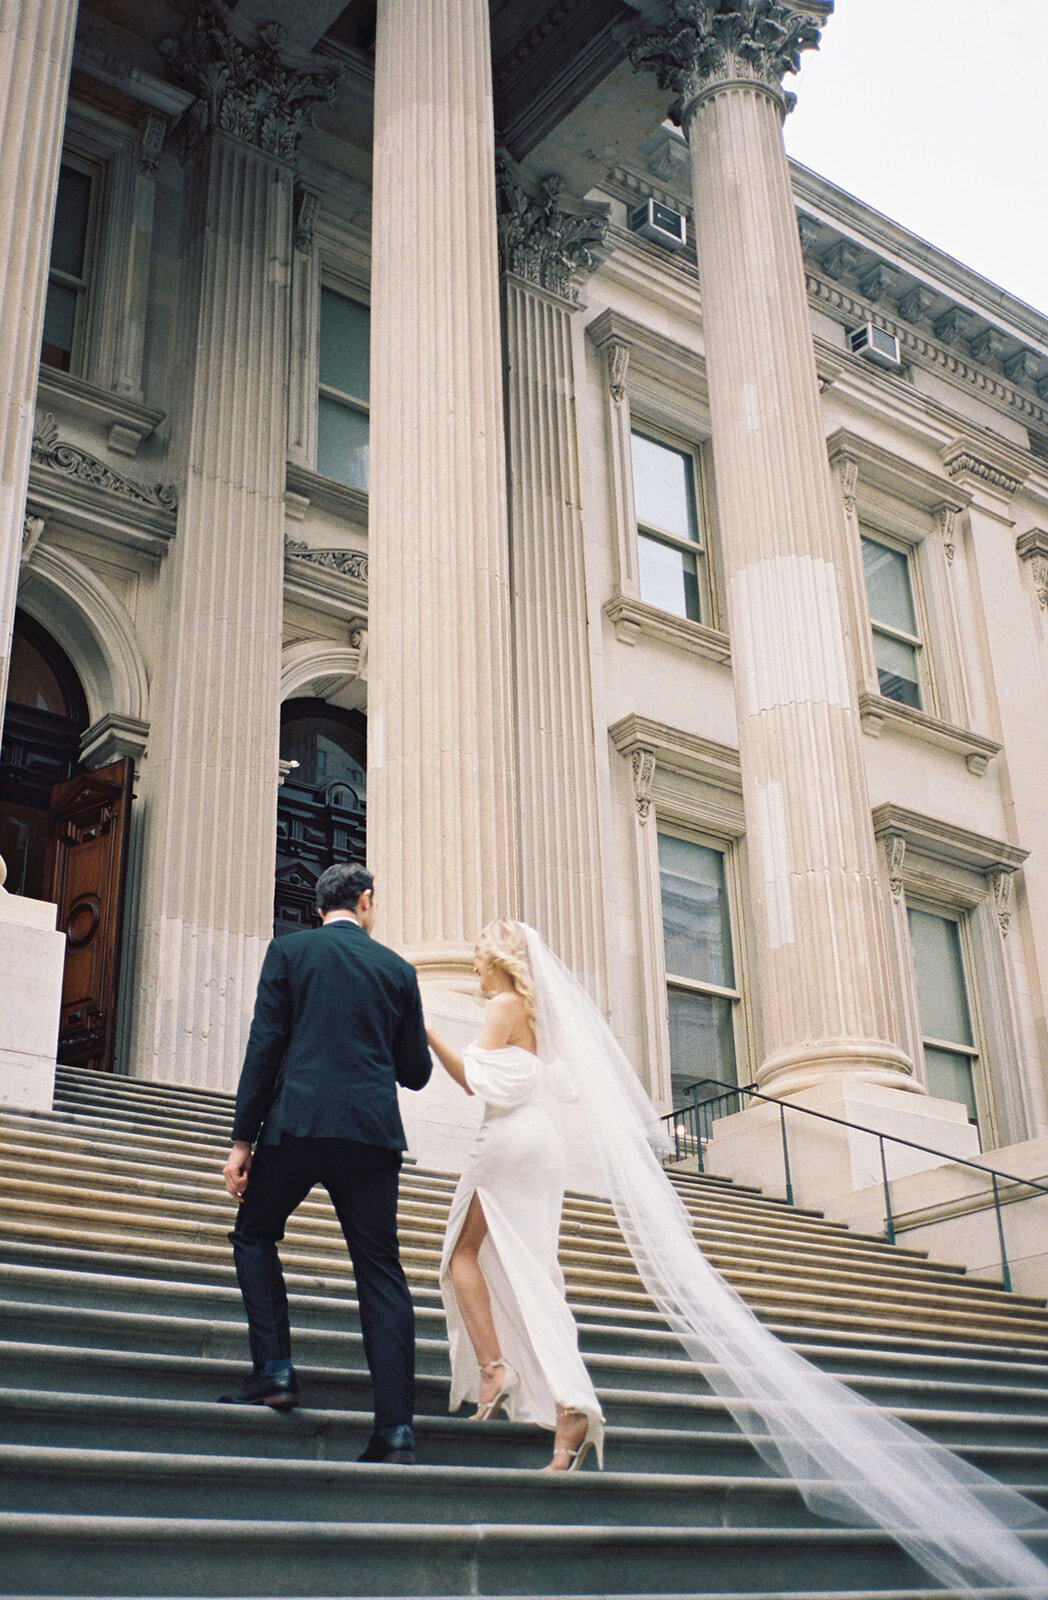 The Plaza Hotel - New York City - Elopement Wedding - Stephanie Michelle Photography - _stephaniemichellephotog - 4-R1-050-23A